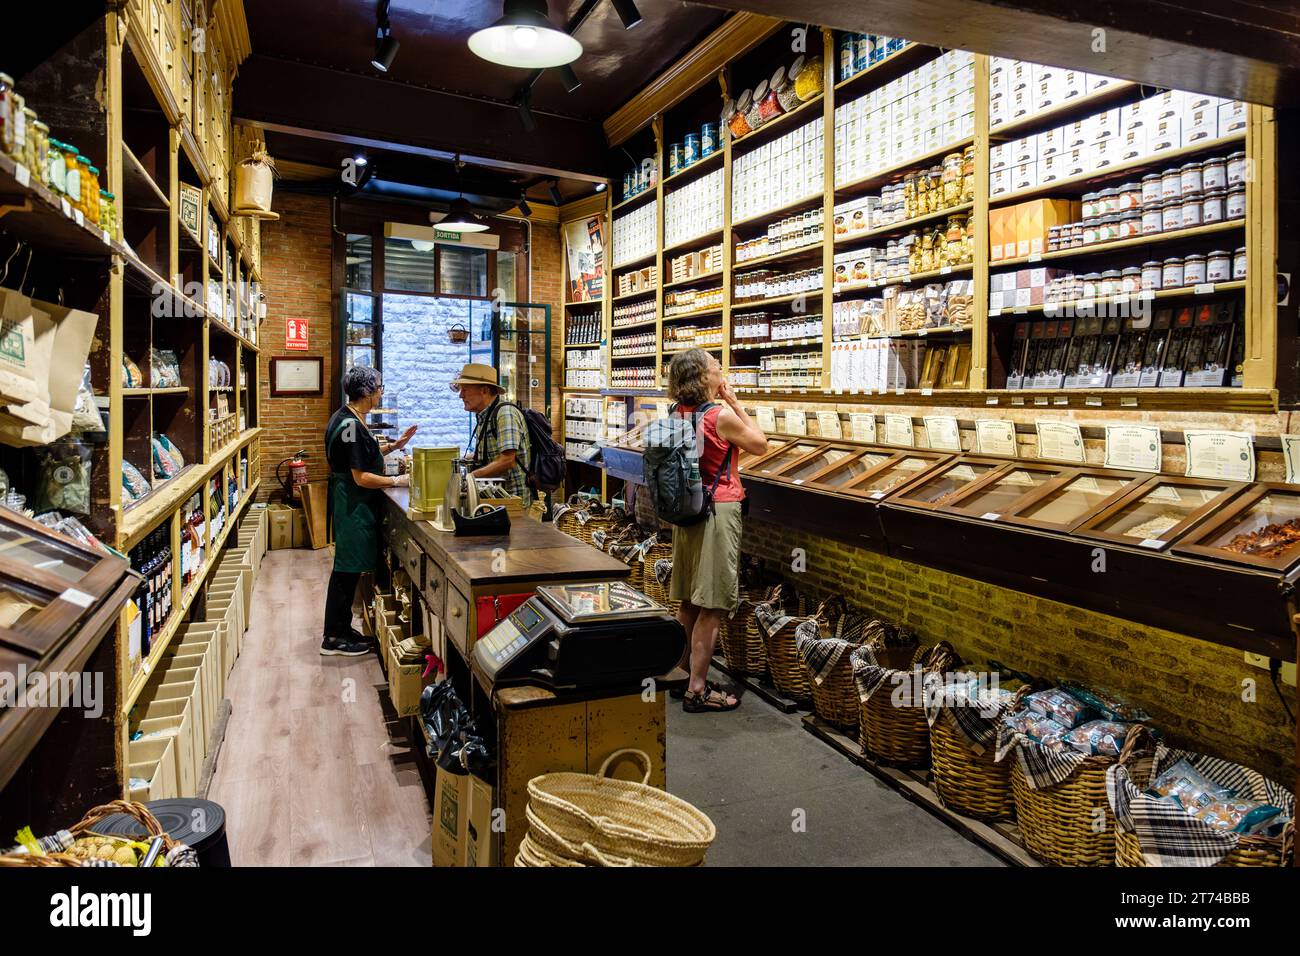 Inside Casa Gispert Queviures, family owned Catalan food store, El Born district, Barcelona, Spain Stock Photo